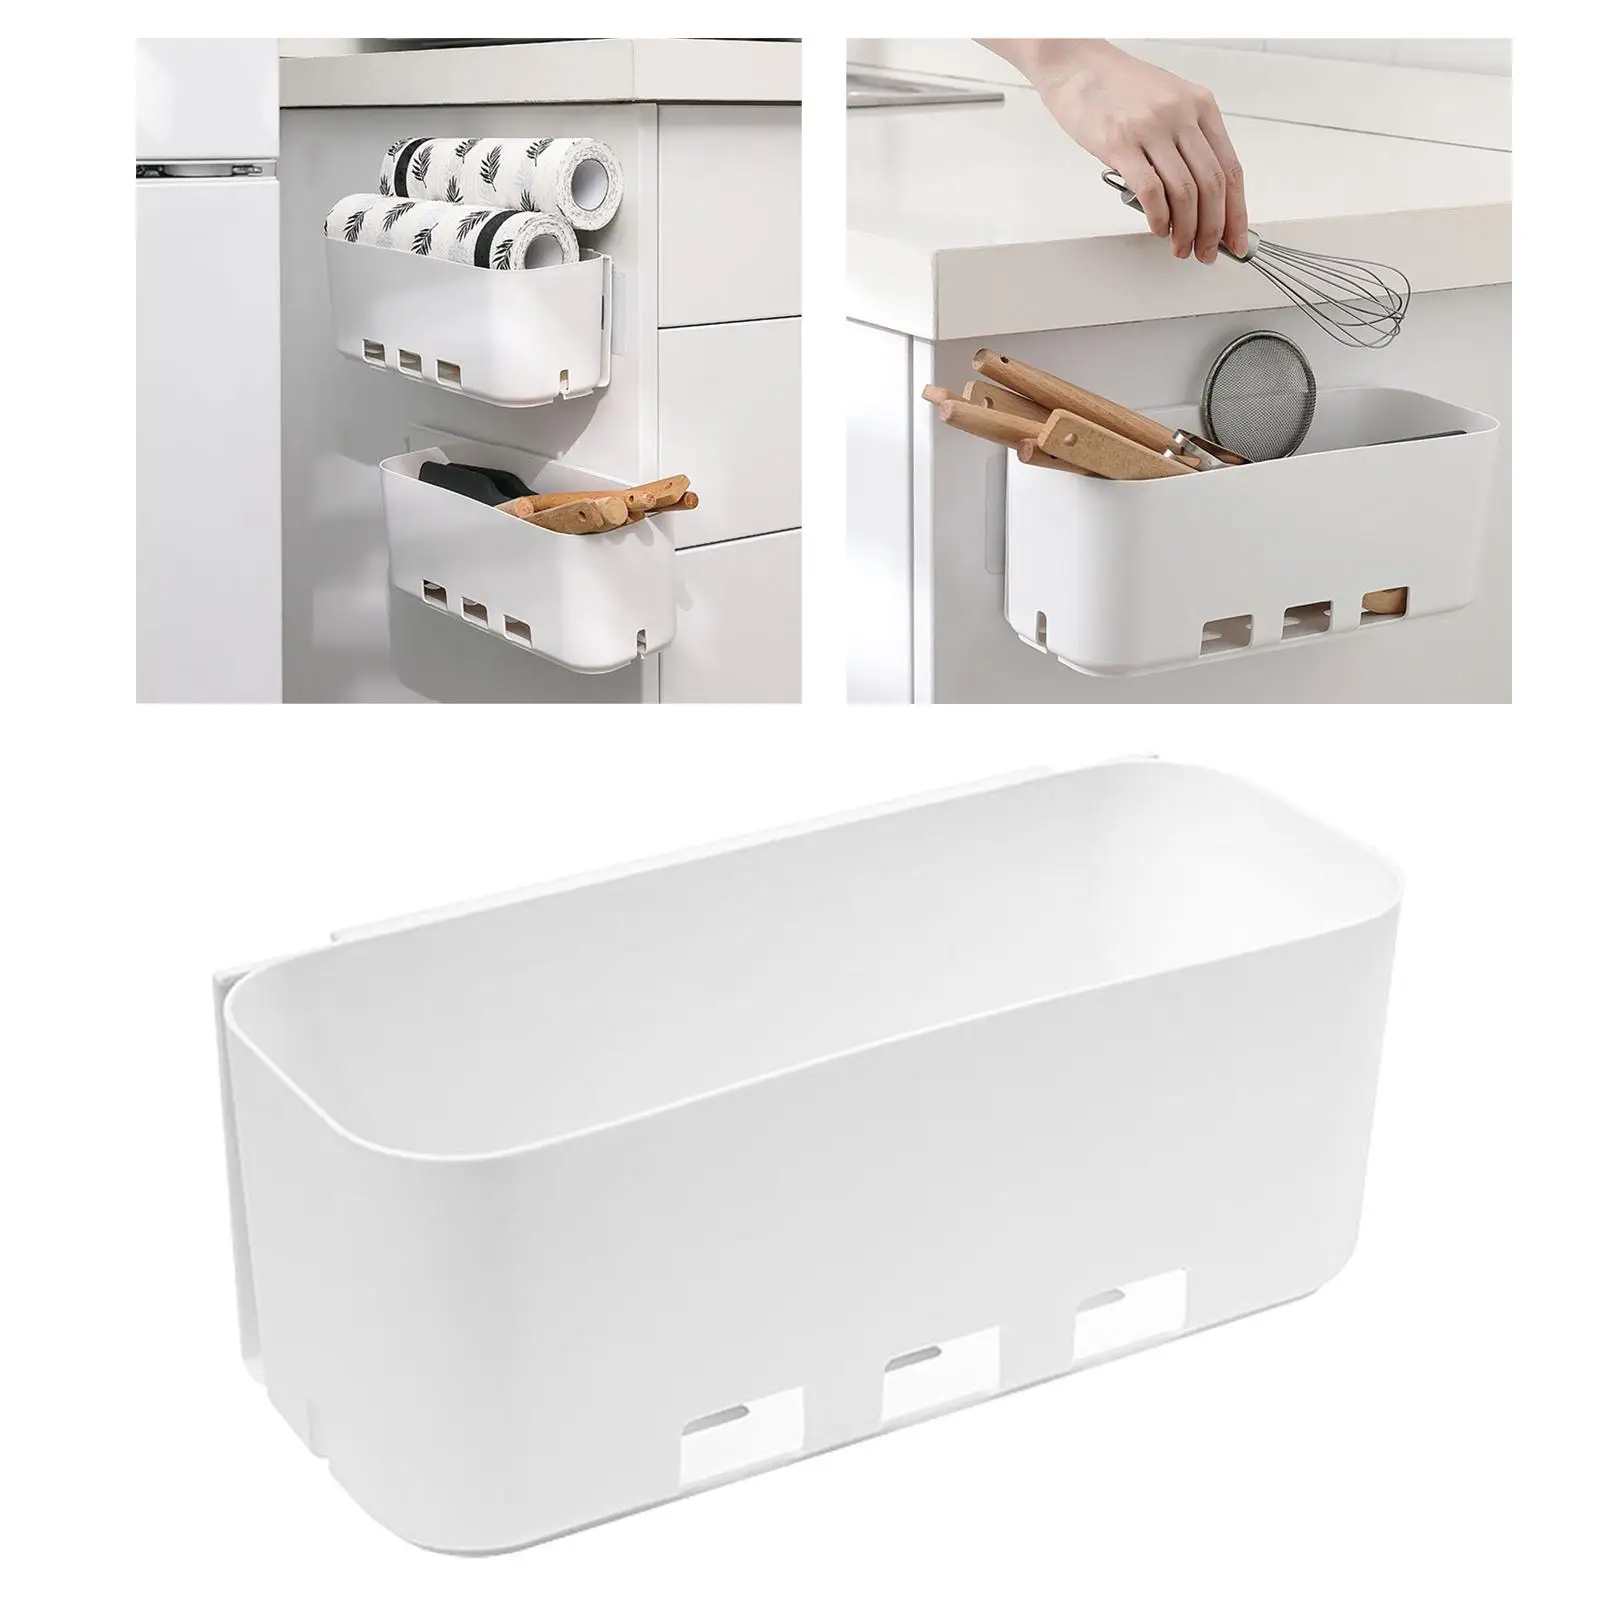 Multifunction Sliding Cabinet Basket Shower Shelf Organizer Baskets Organizer with Guide Rail for Bathroom Pantry Home